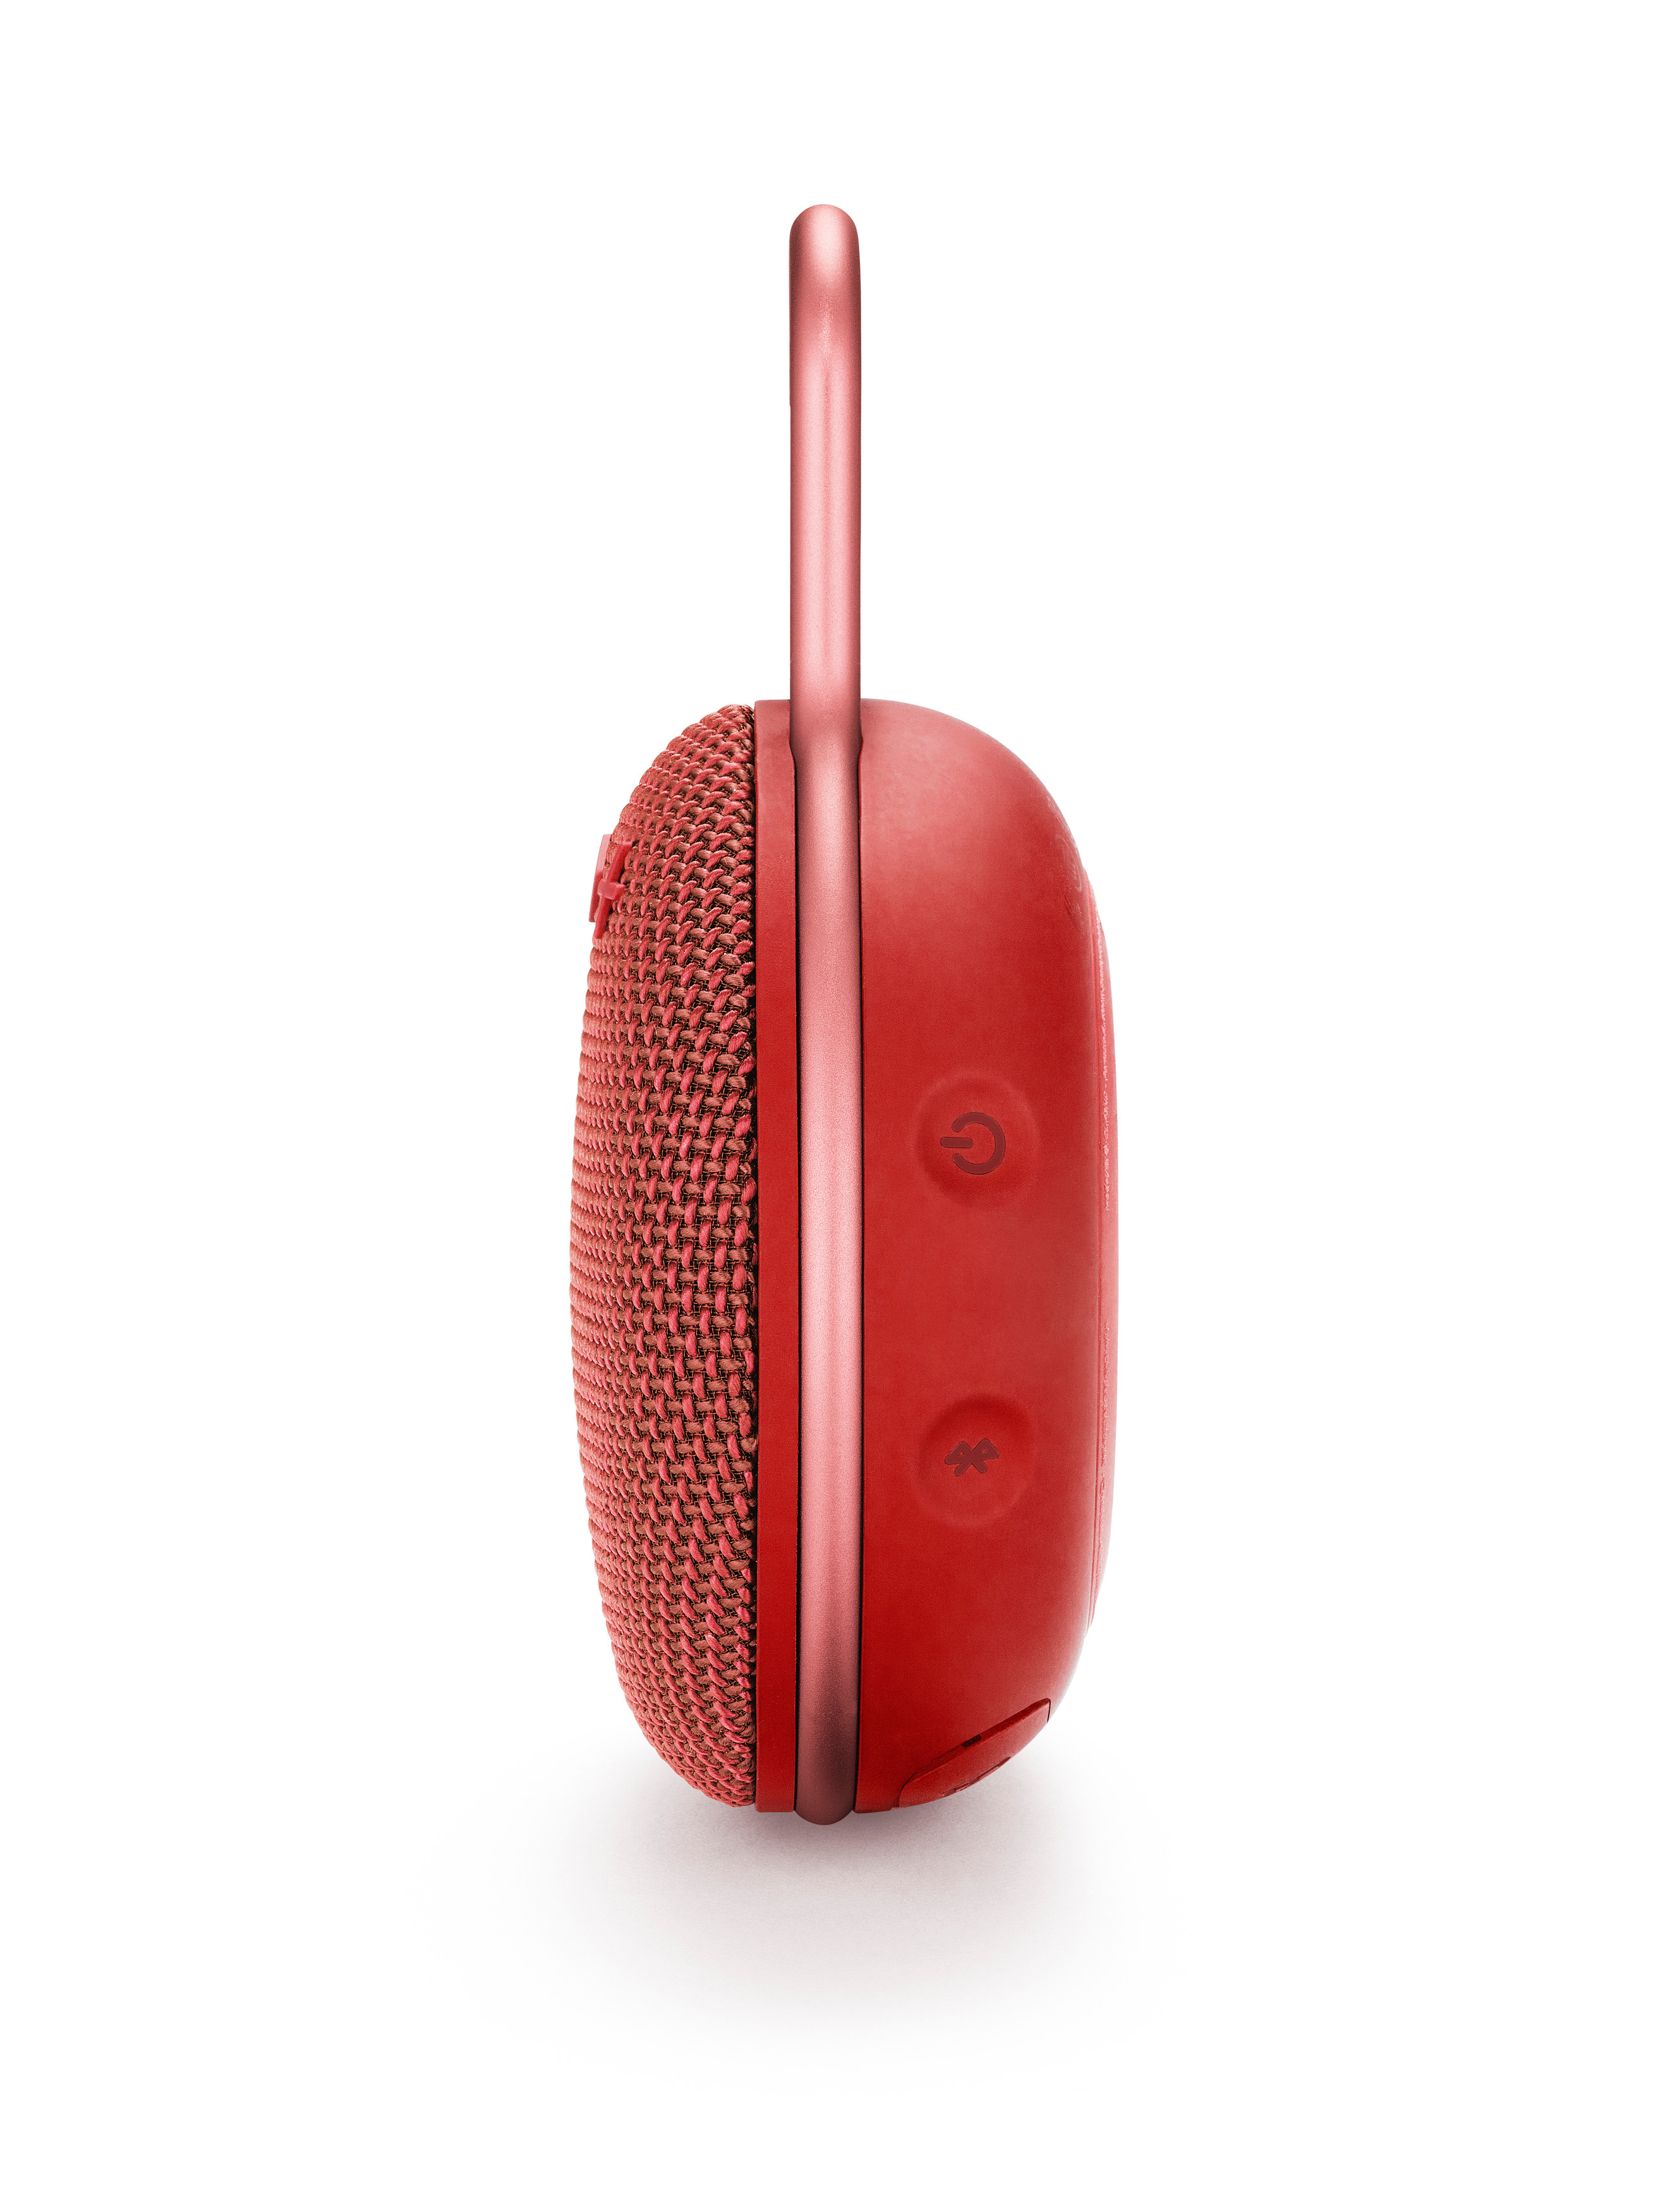 JBL Clip Rot, 3 Wasserfest Lautsprecher, Bluetooth